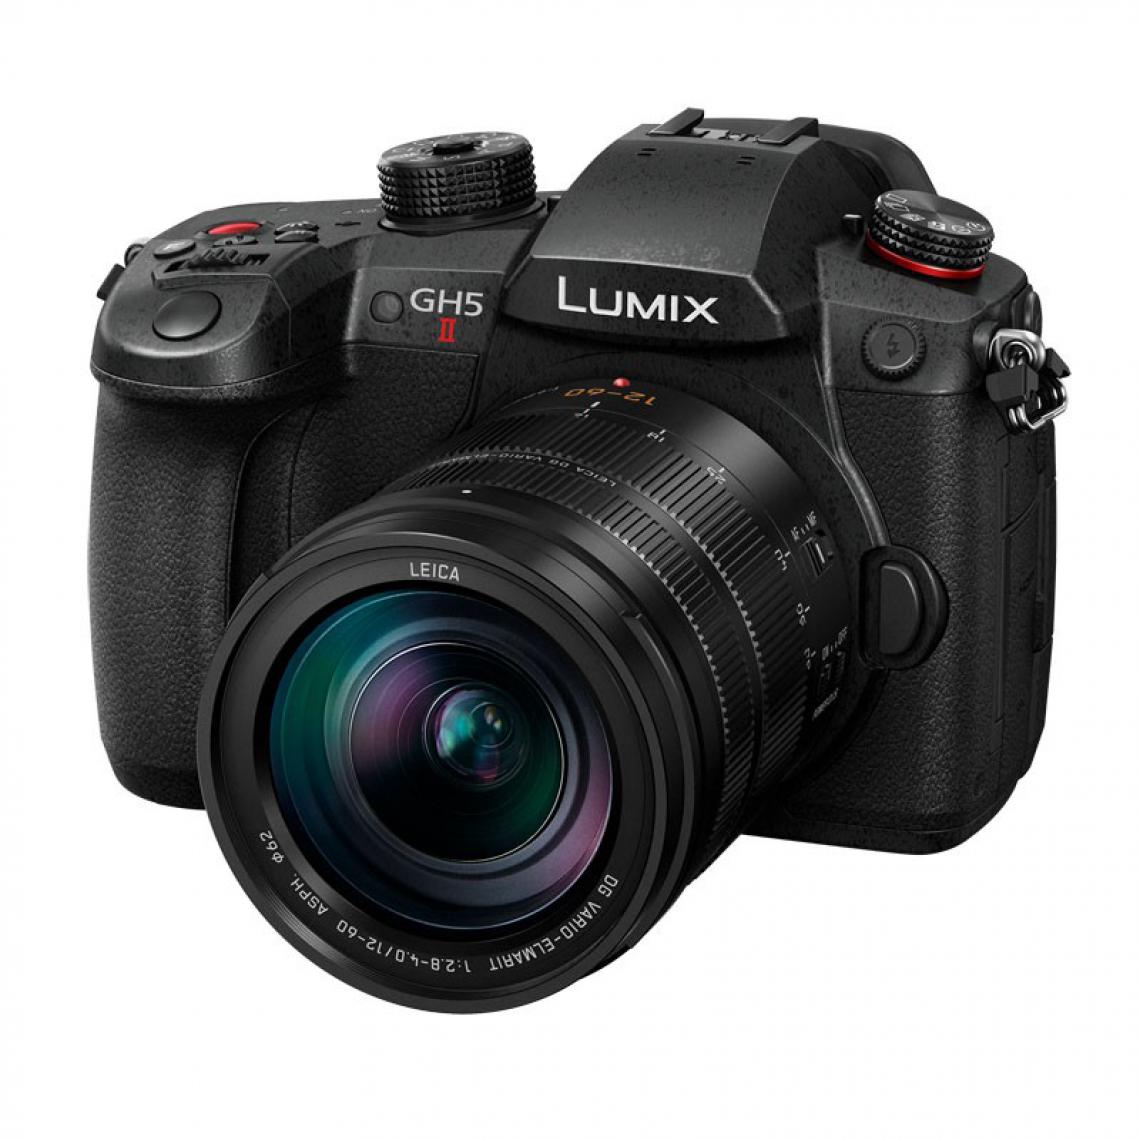 Panasonic - Rasage Electrique - PANASONIC LUMIX GH5 II + Objectif Leica DG Vario Elmar 12-60mm f/2.8-4 POWER OIS - Appareil Hybride